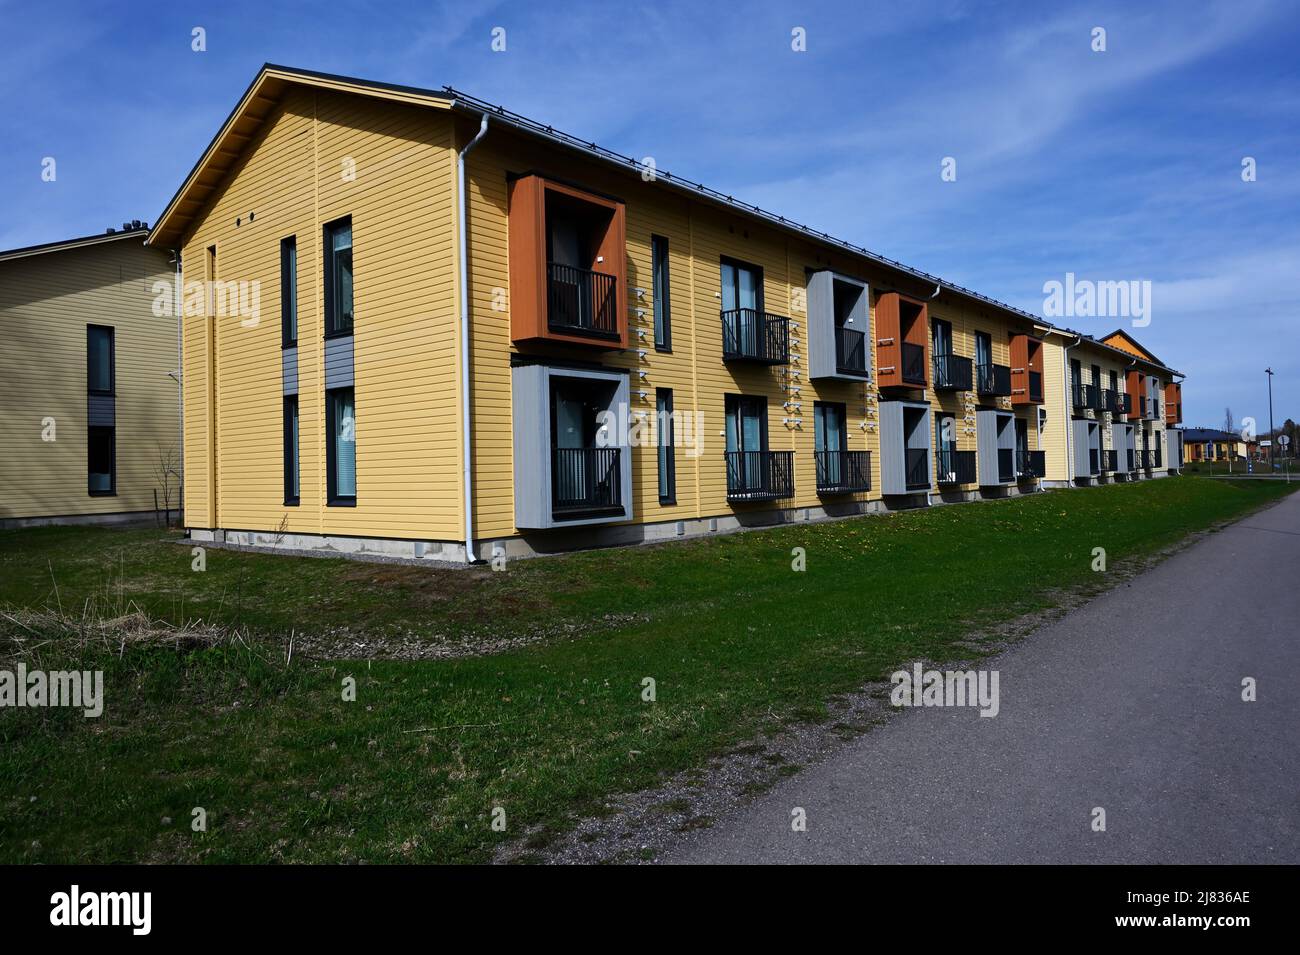 Zona residencial de casas típicas de Finlandia Foto de stock